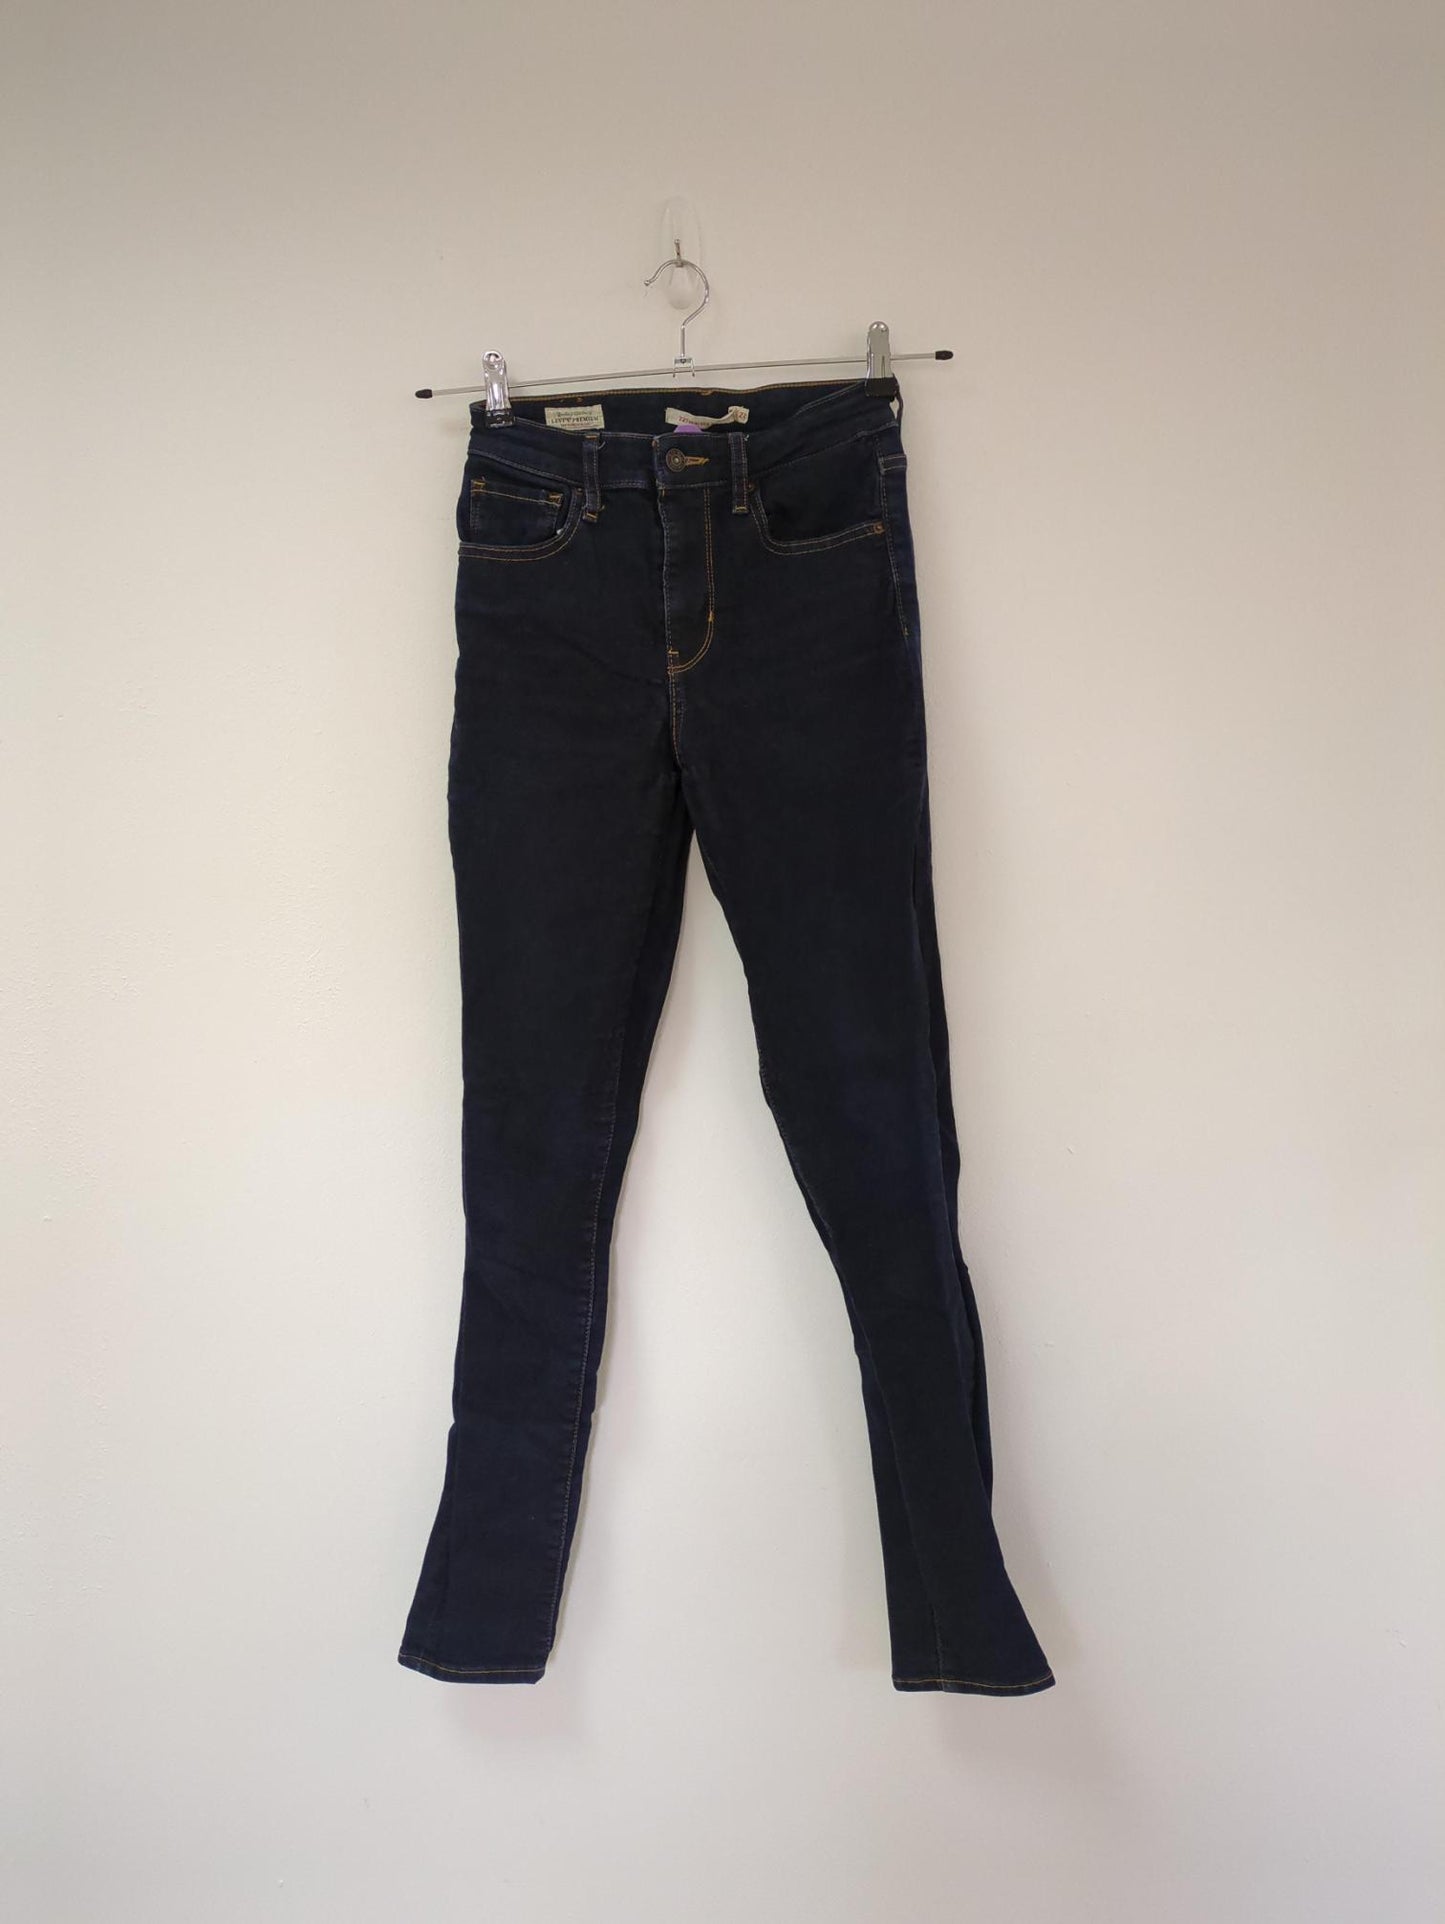 Dark blue jeans, size 8/10 - Damaged Item Sale